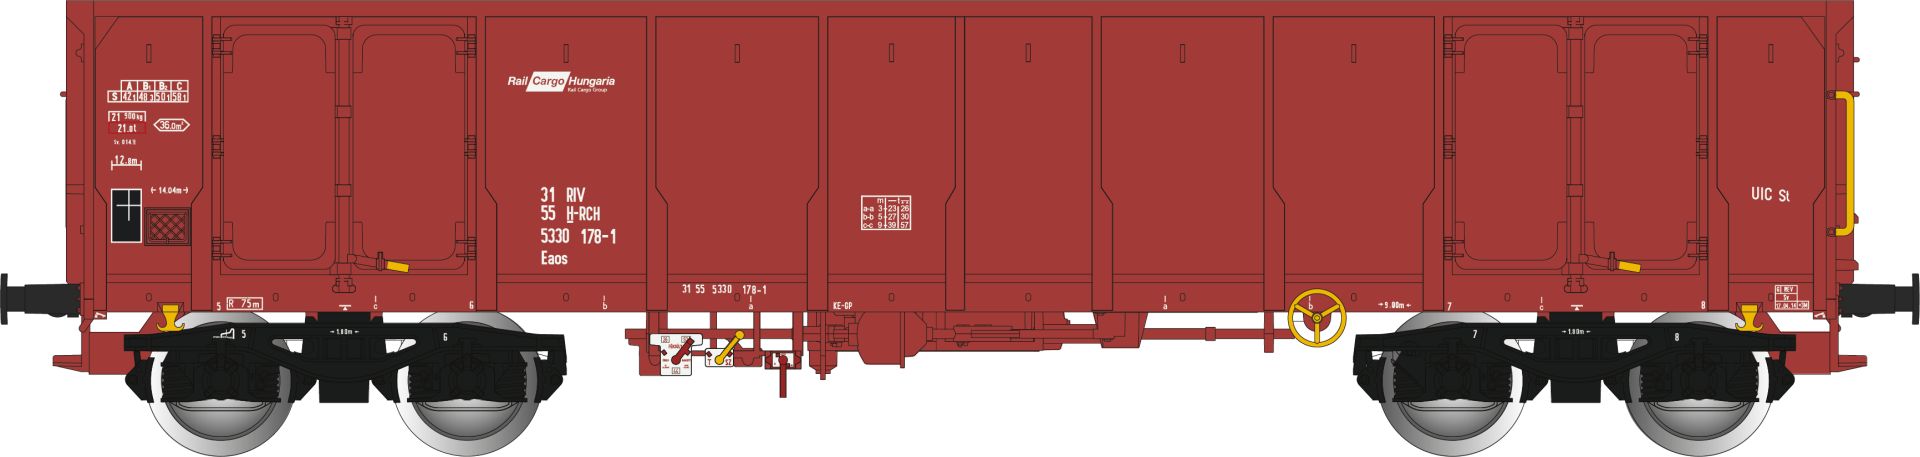 Albert Modell 533006 - Offener Güterwagen Eaos, H-RCH, Ep.VI